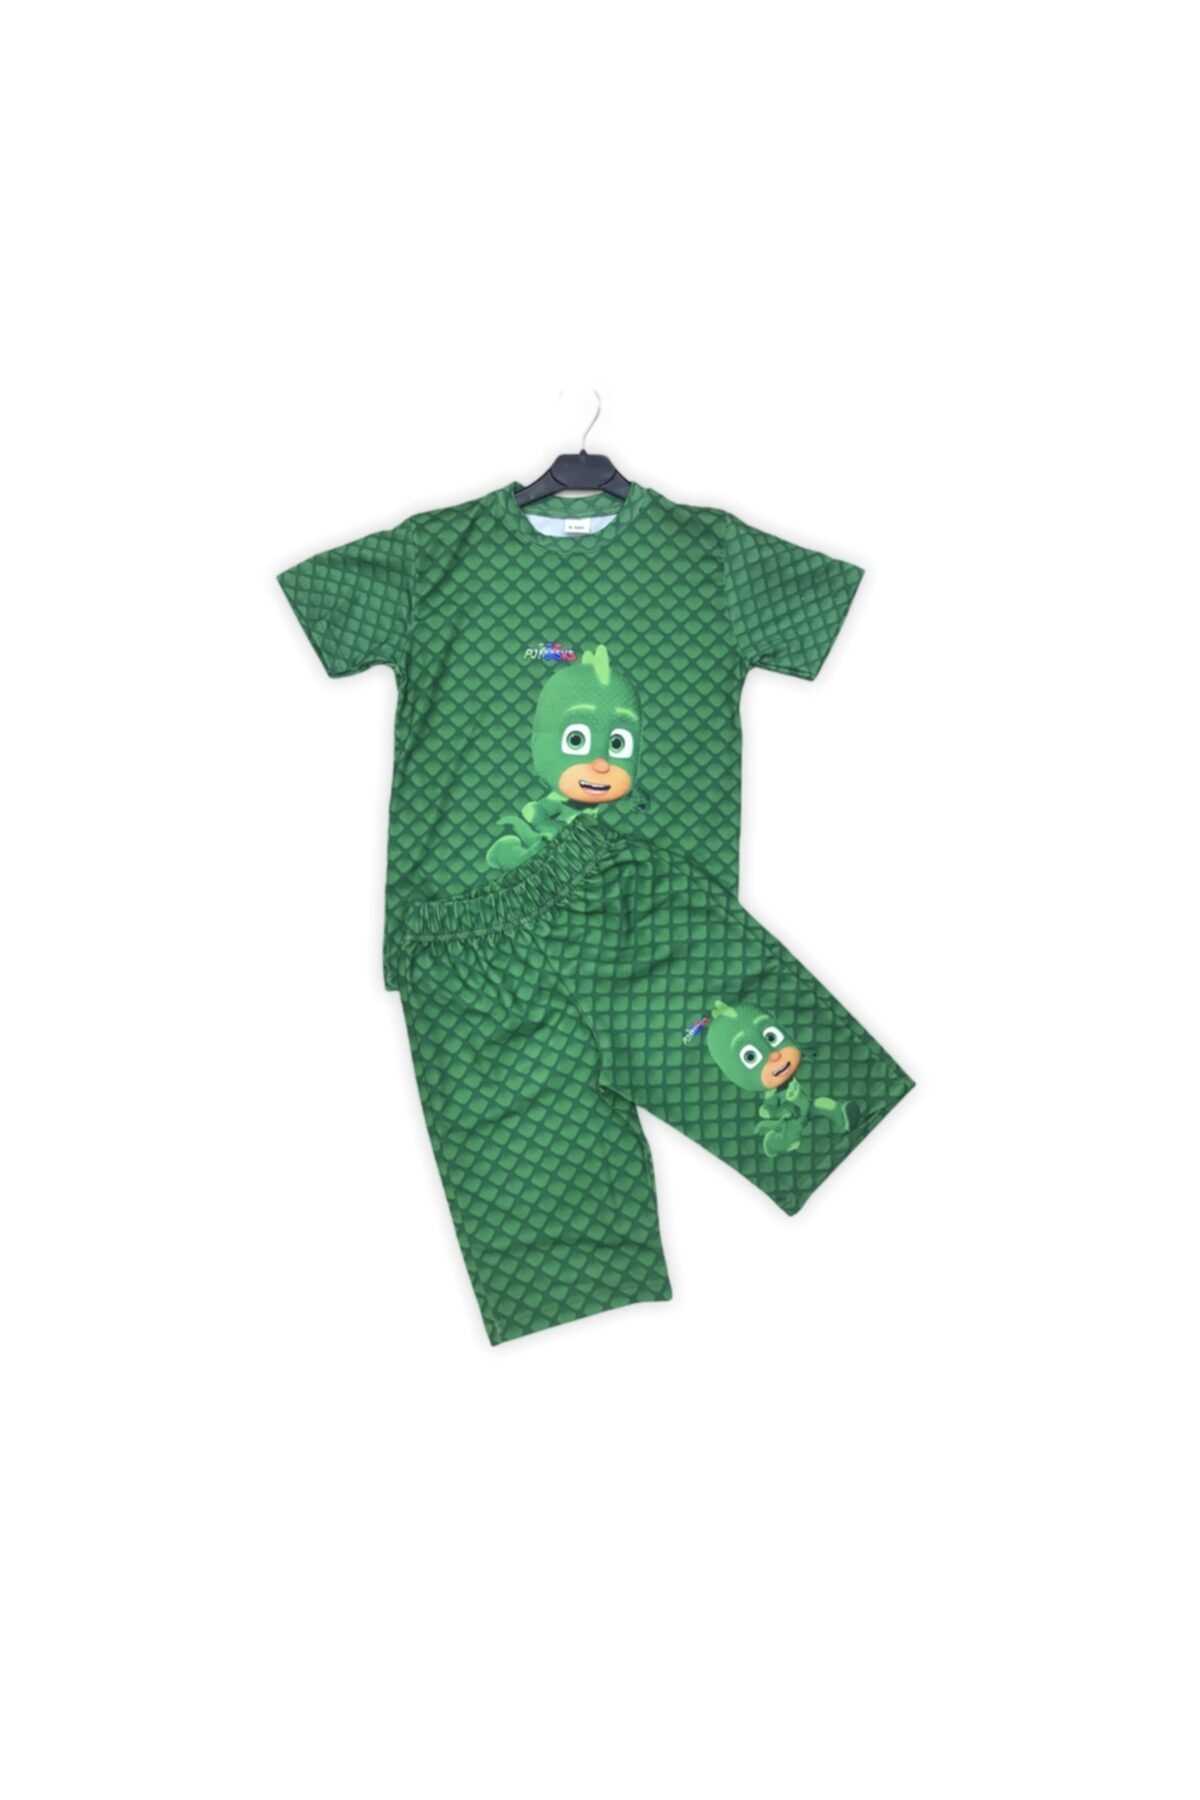 لباس خاص پسرانه مدل دار شیک Dıgıl Kids رنگ سبز کد ty108951684